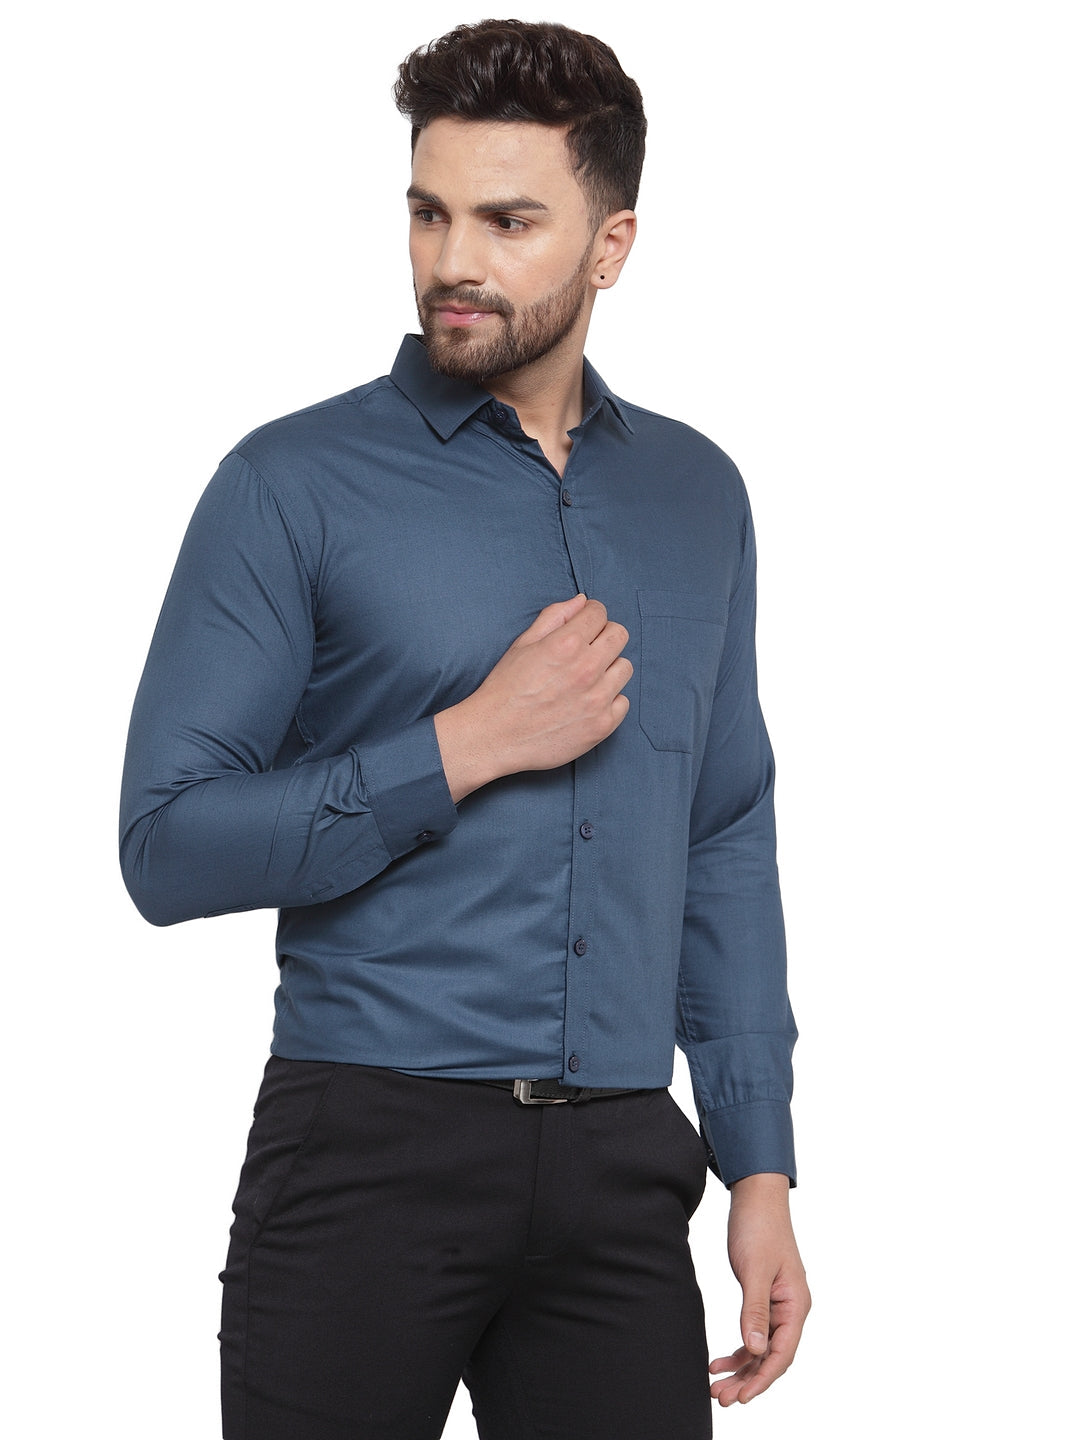 Men's Cotton Solid Teal Blue Formal Shirt's ( SF 361Teal ) - Jainish